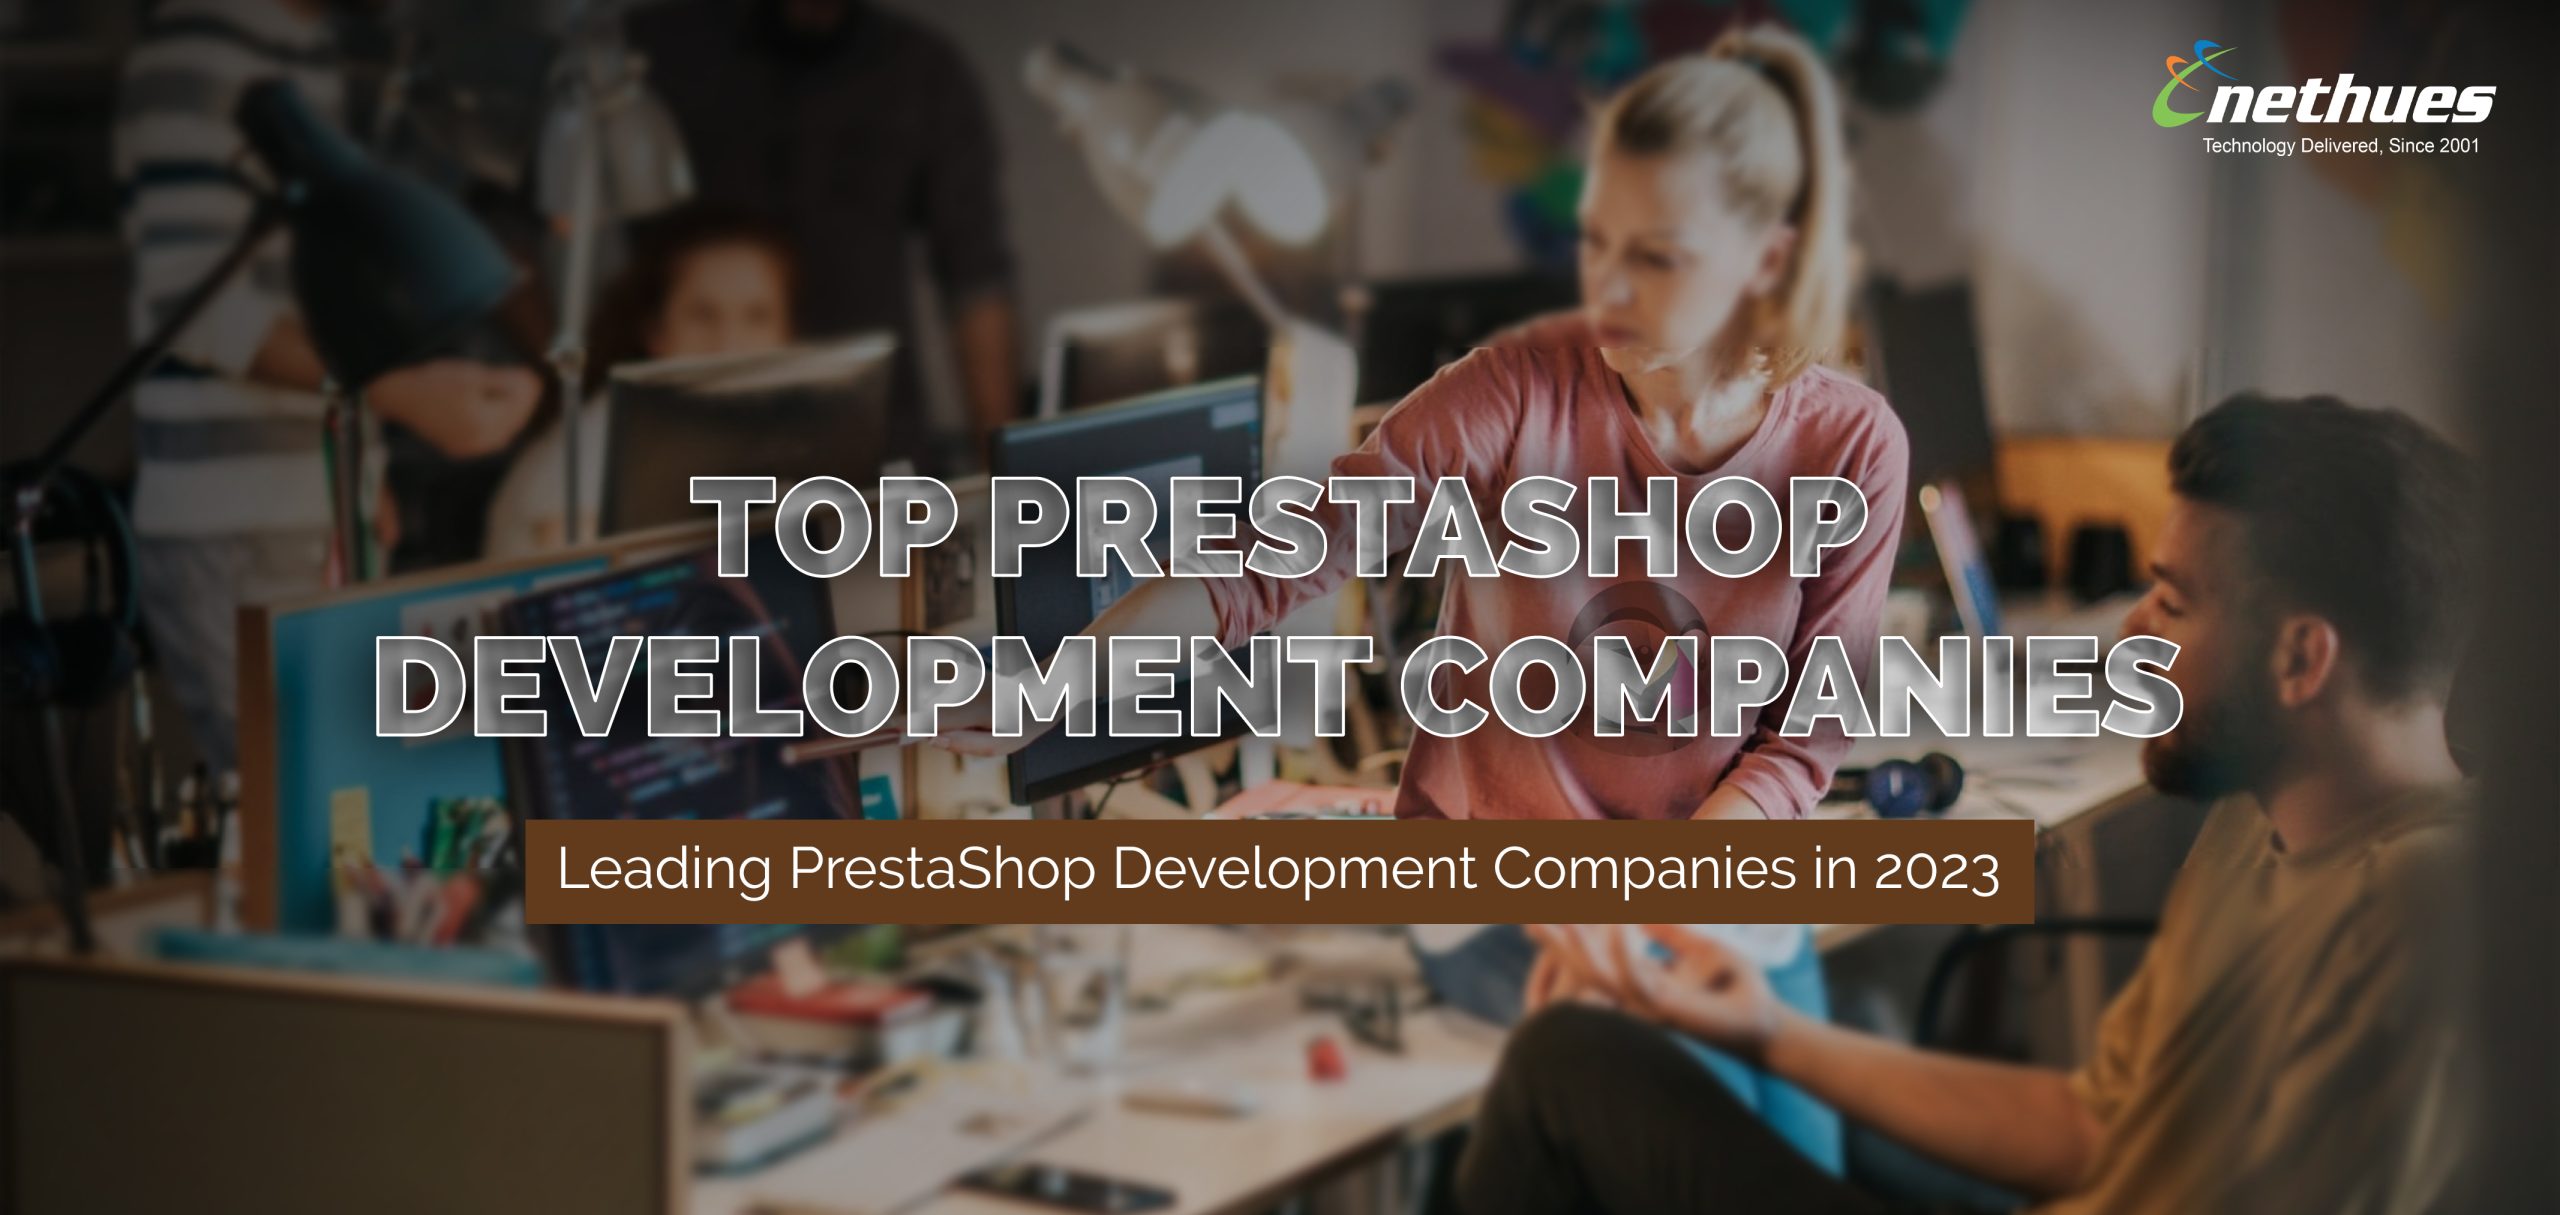 Why hire Top PrestaShop Development Companies in 2023?